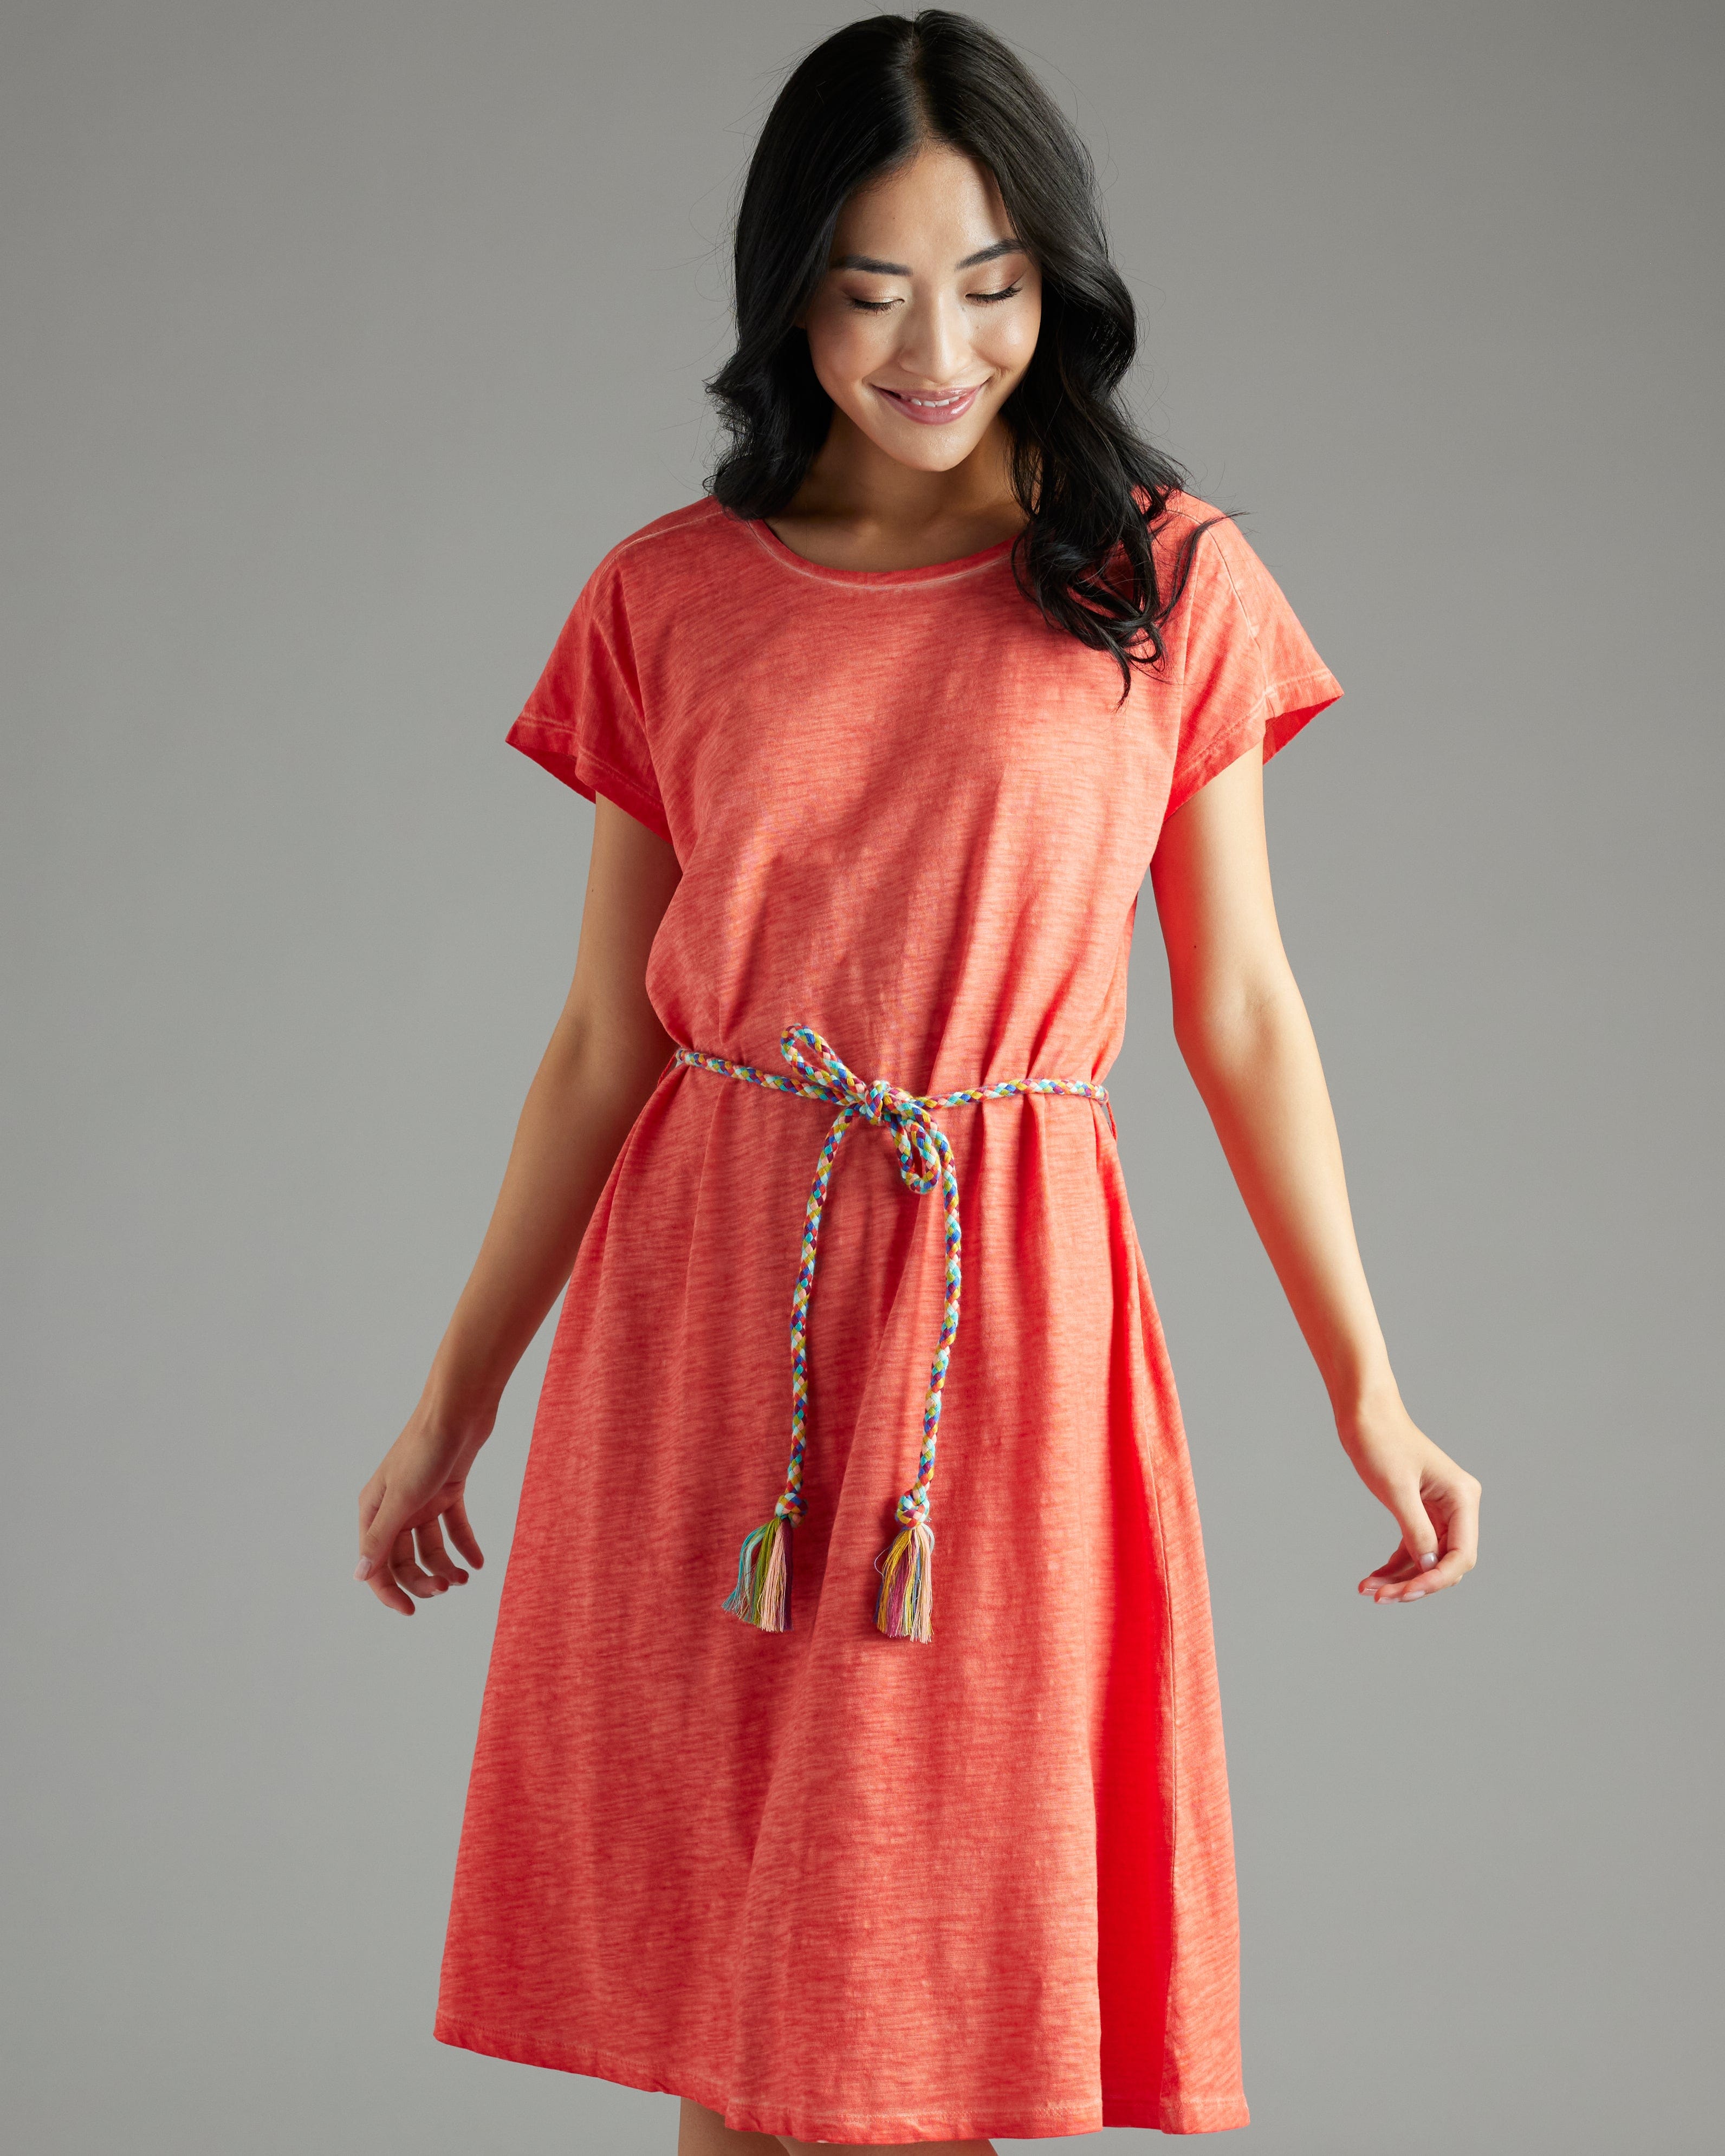 Woman in a short sleeve, knee-length orange dress with tie around waist